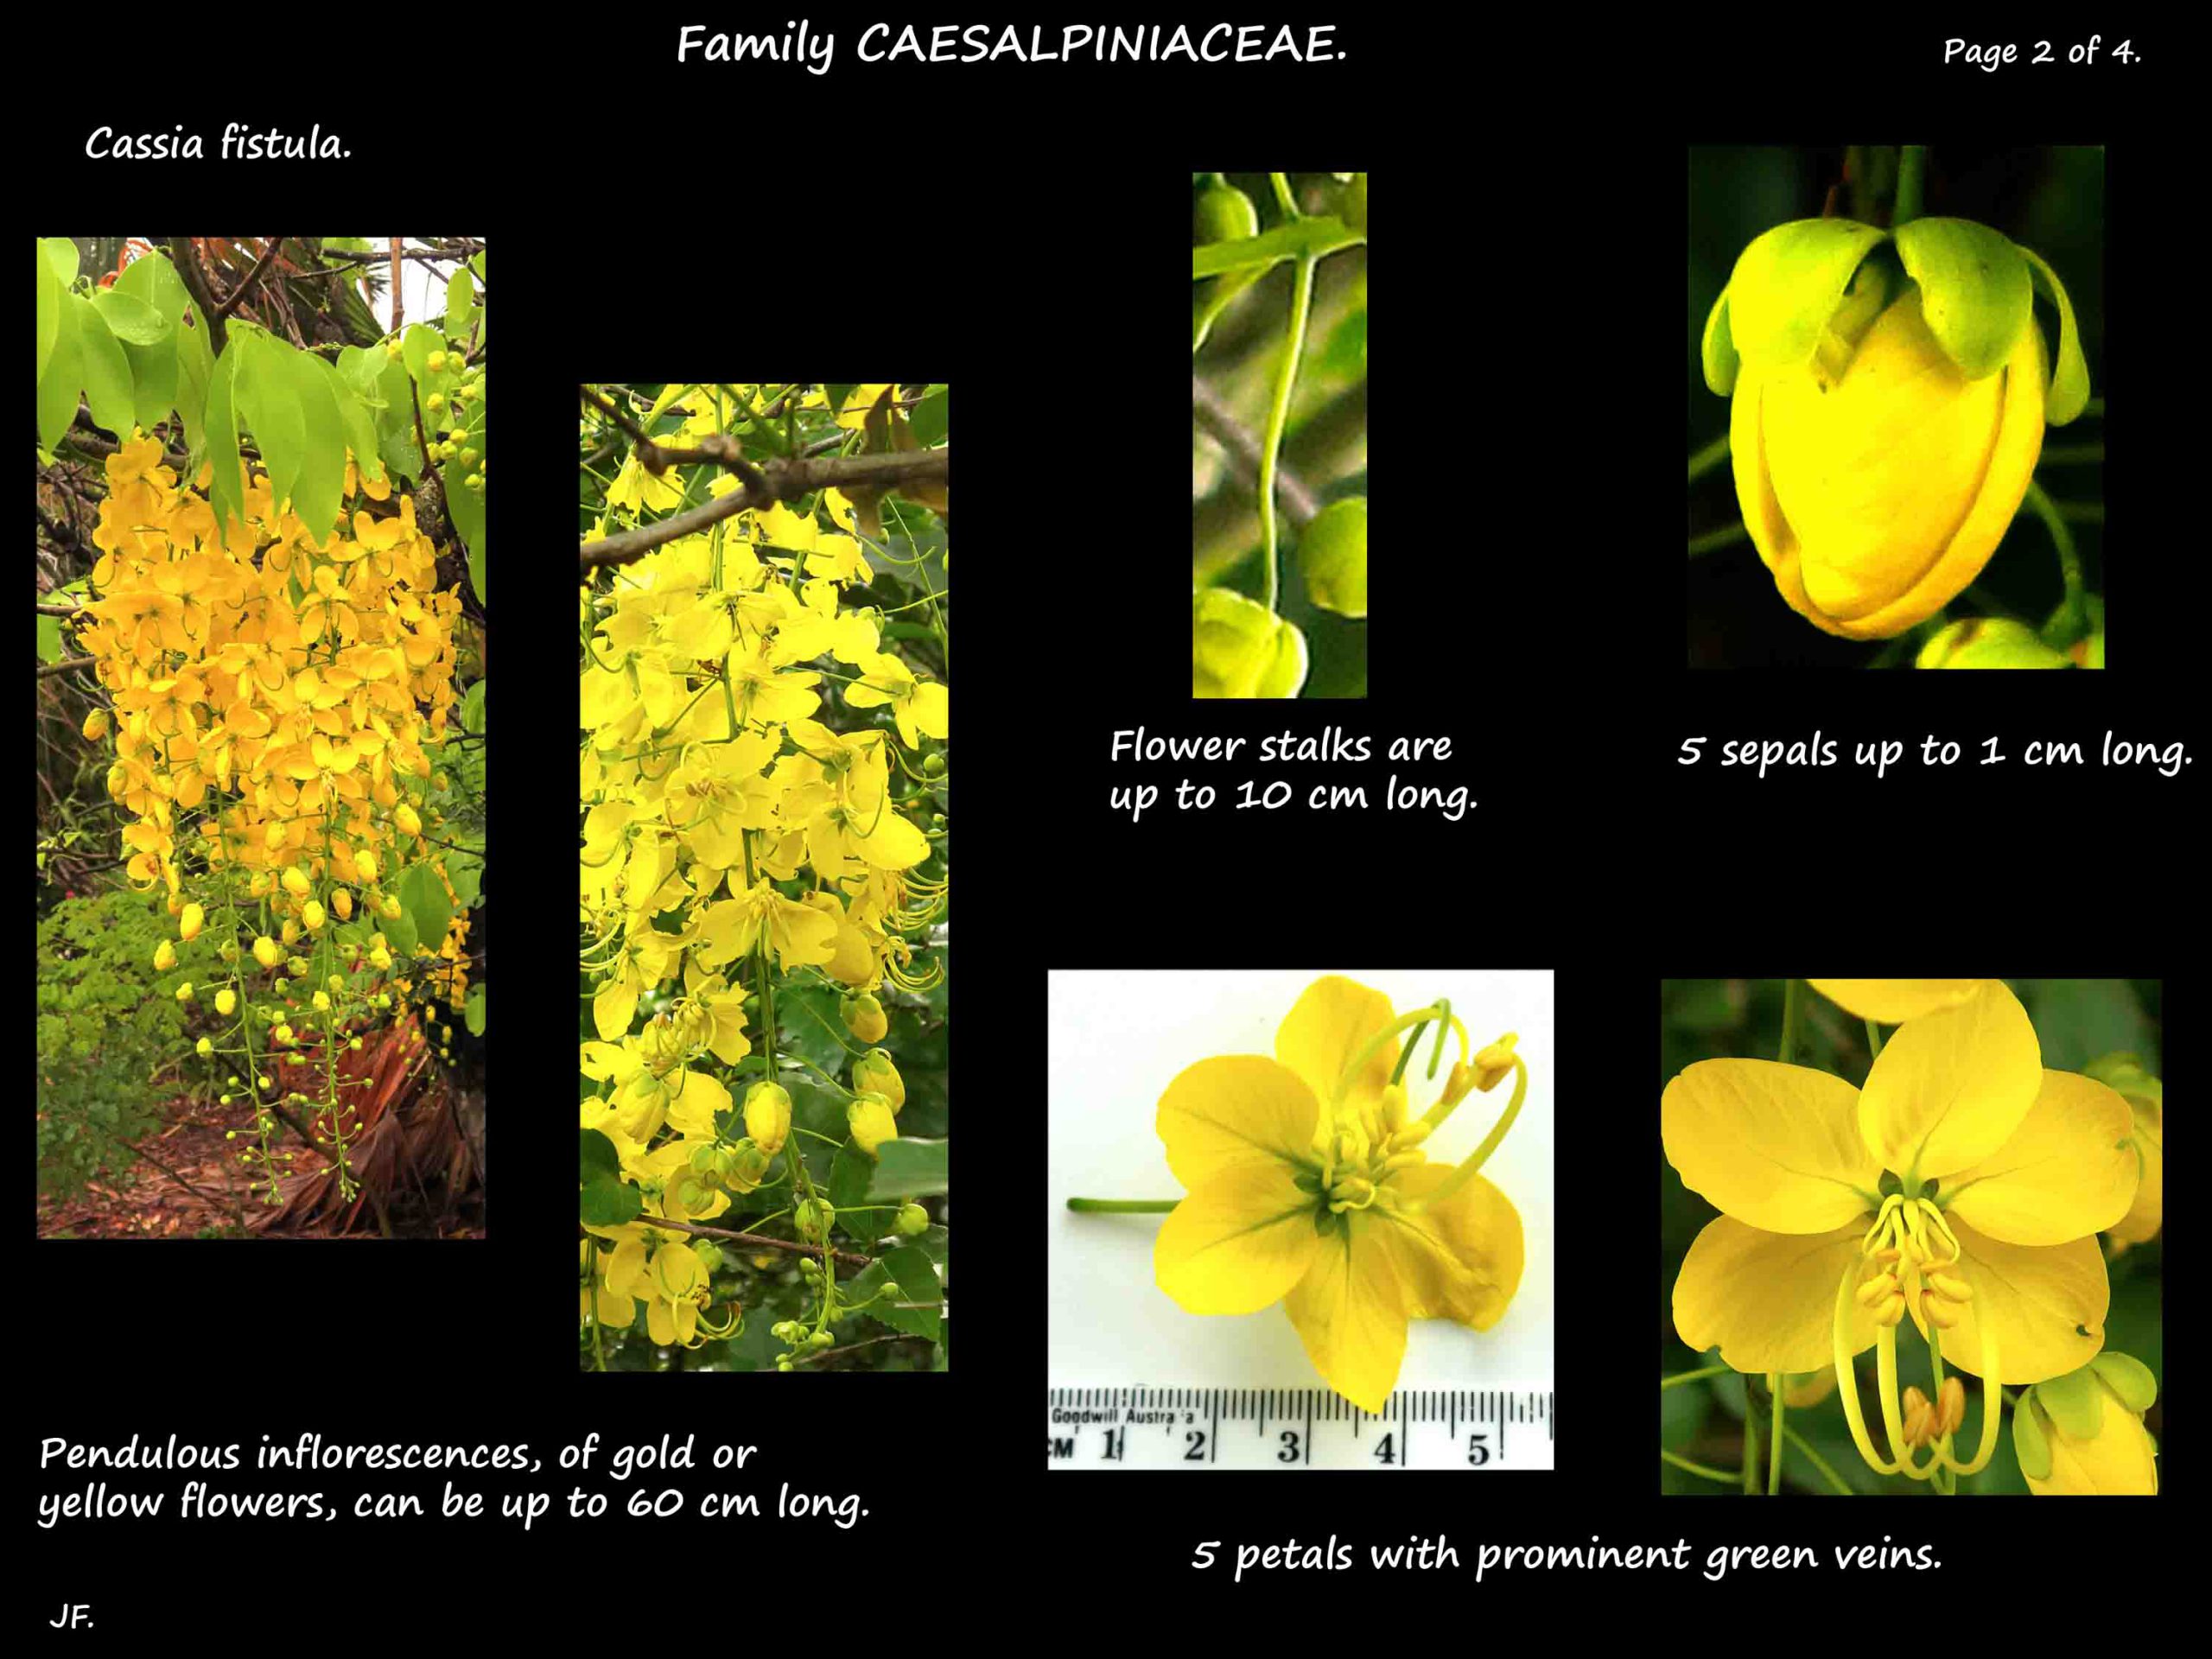 2 Cassia fistula flowers